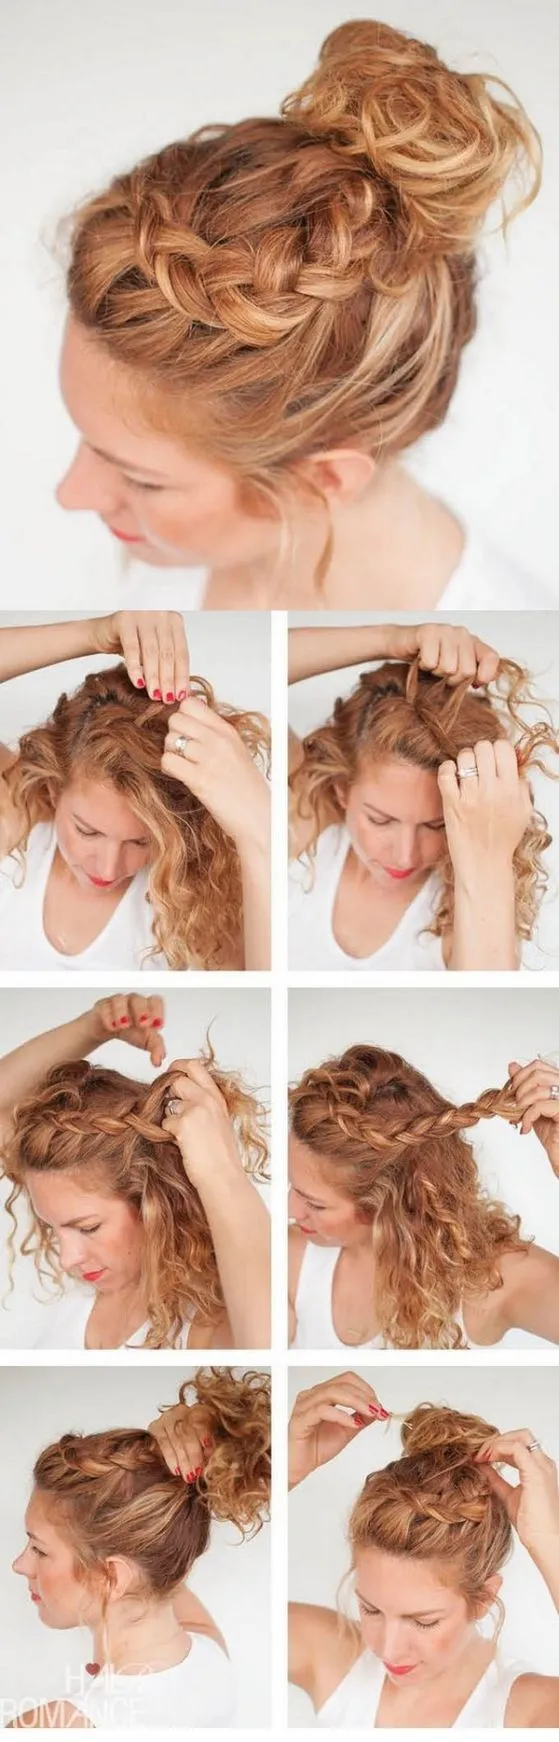 5 peinados para pelo rizado que podrás hacer en solo 5 minutos